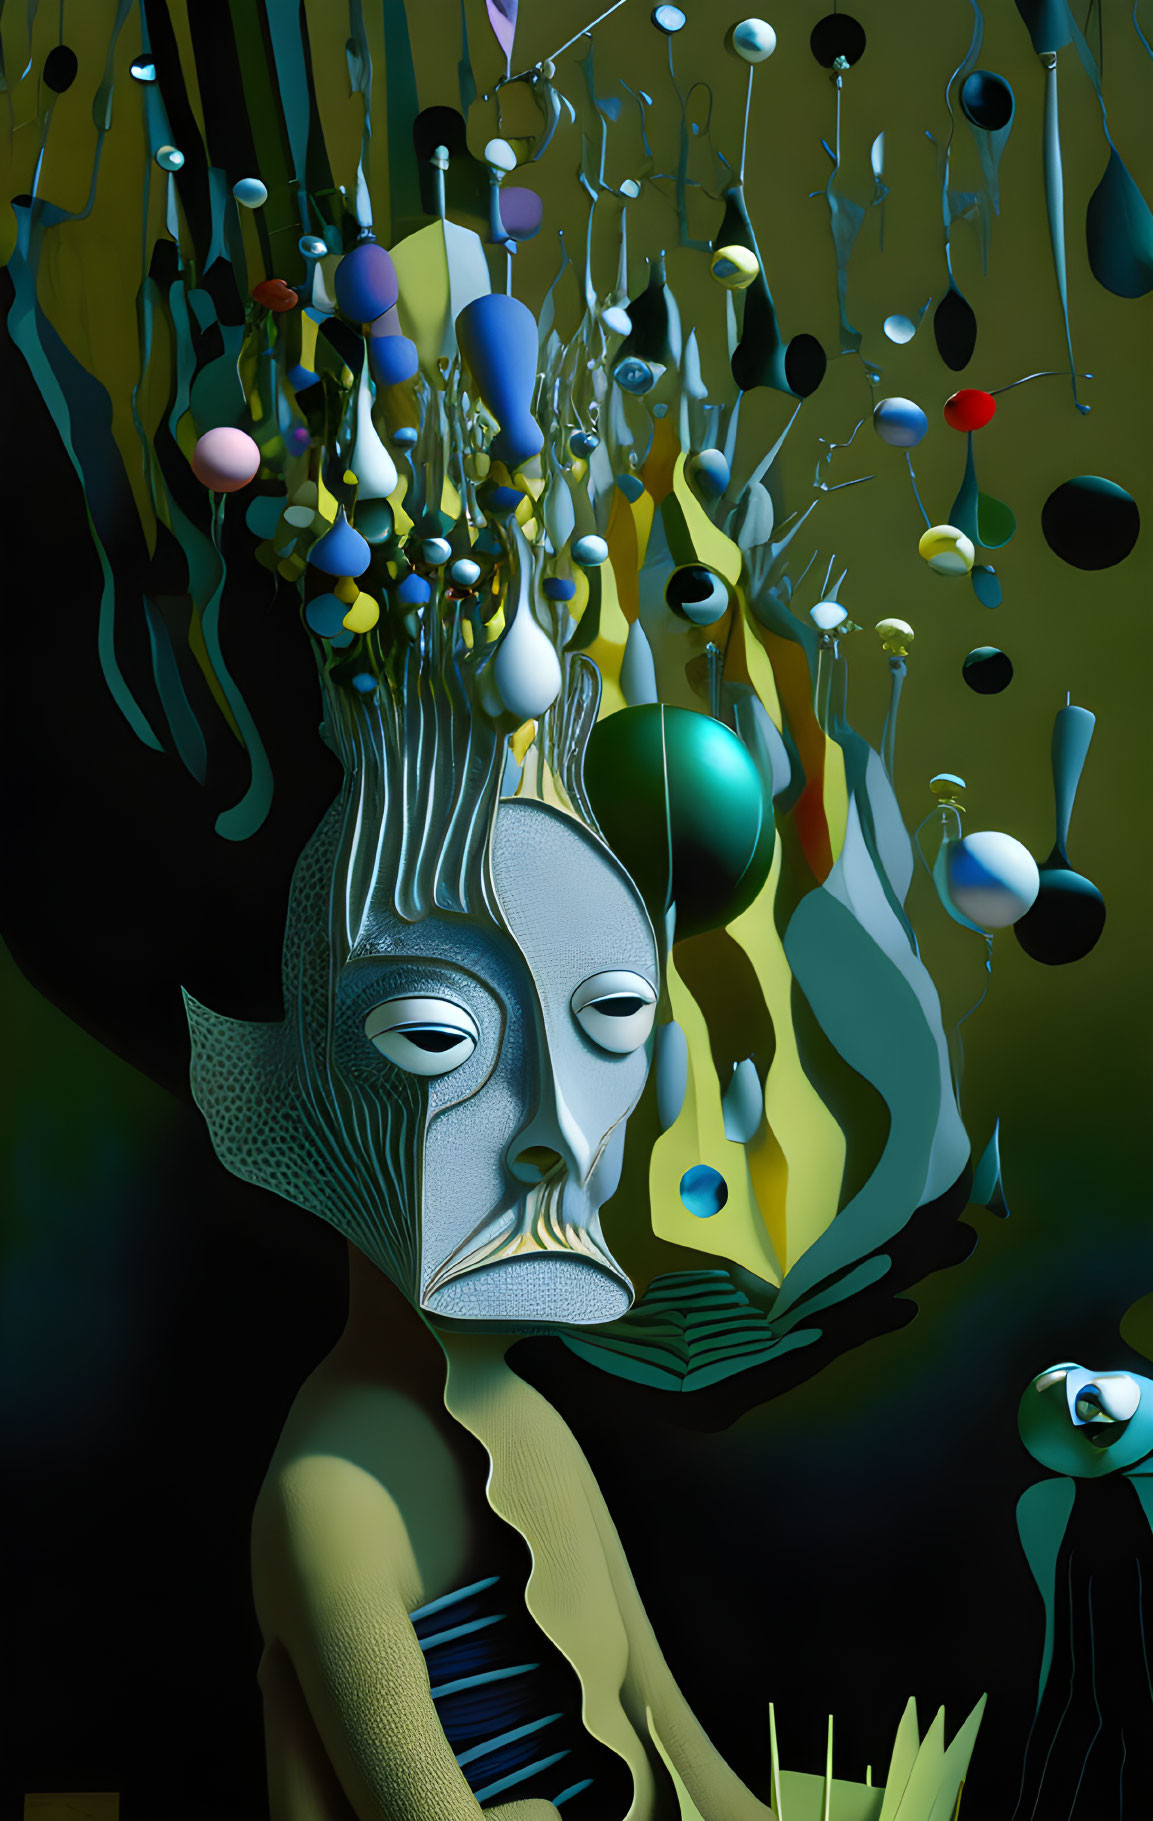 Surreal digital artwork: figure with melting face, colorful orbs, liquid strands on dark background